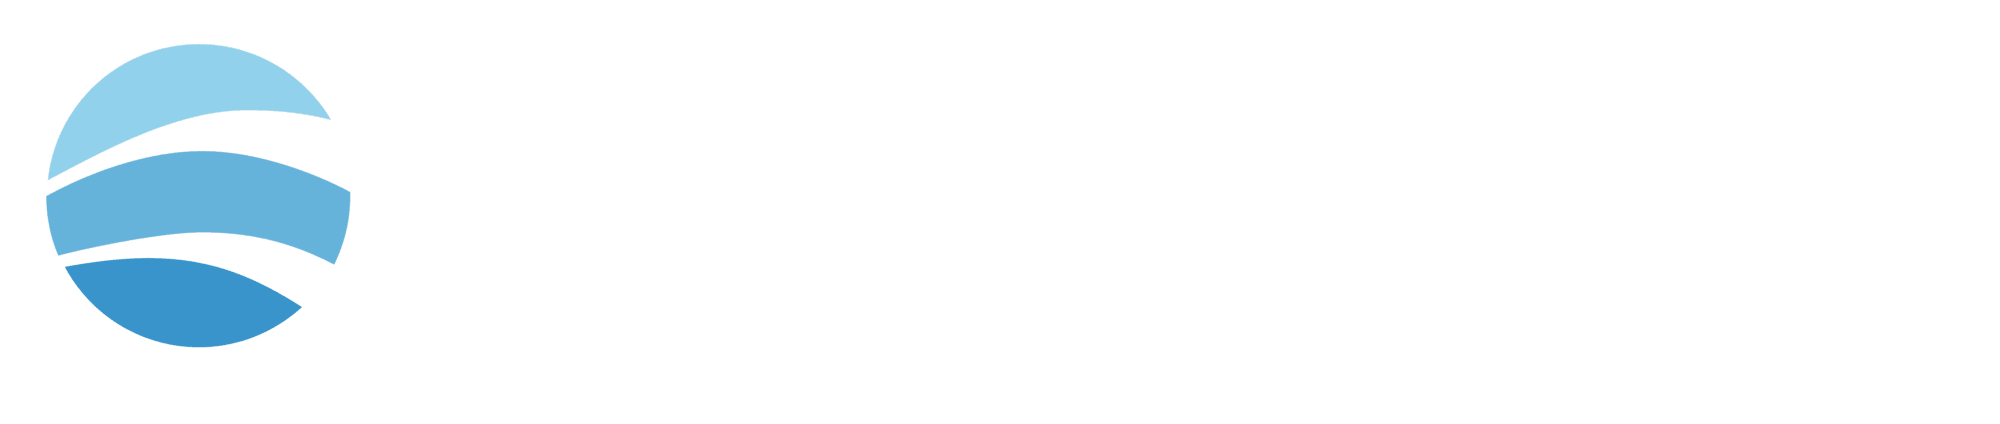 lens-online's company logo